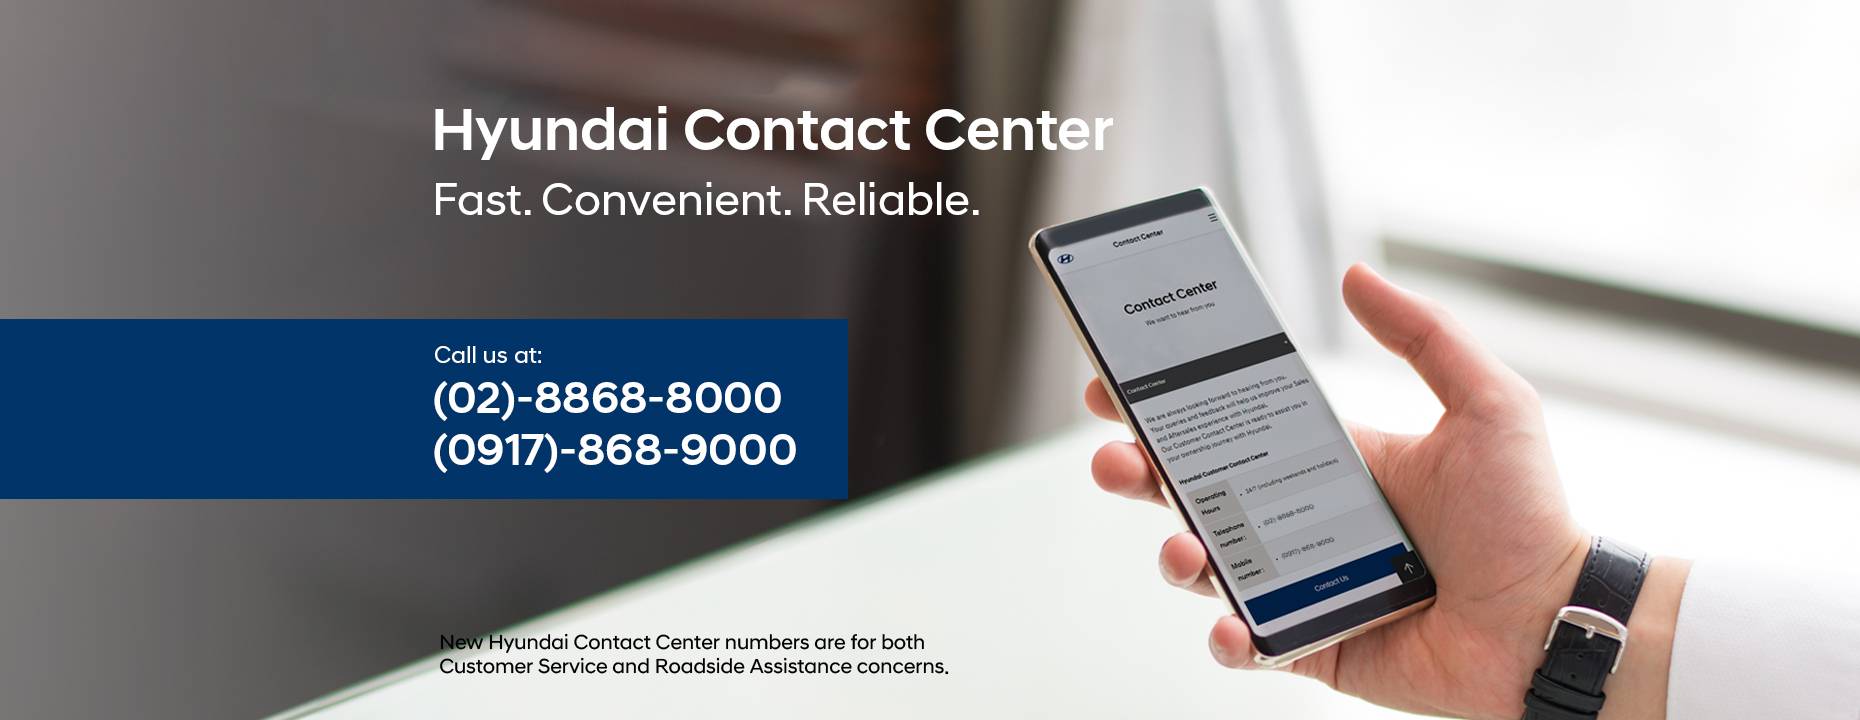 Hyundai PH Contact Center banner image